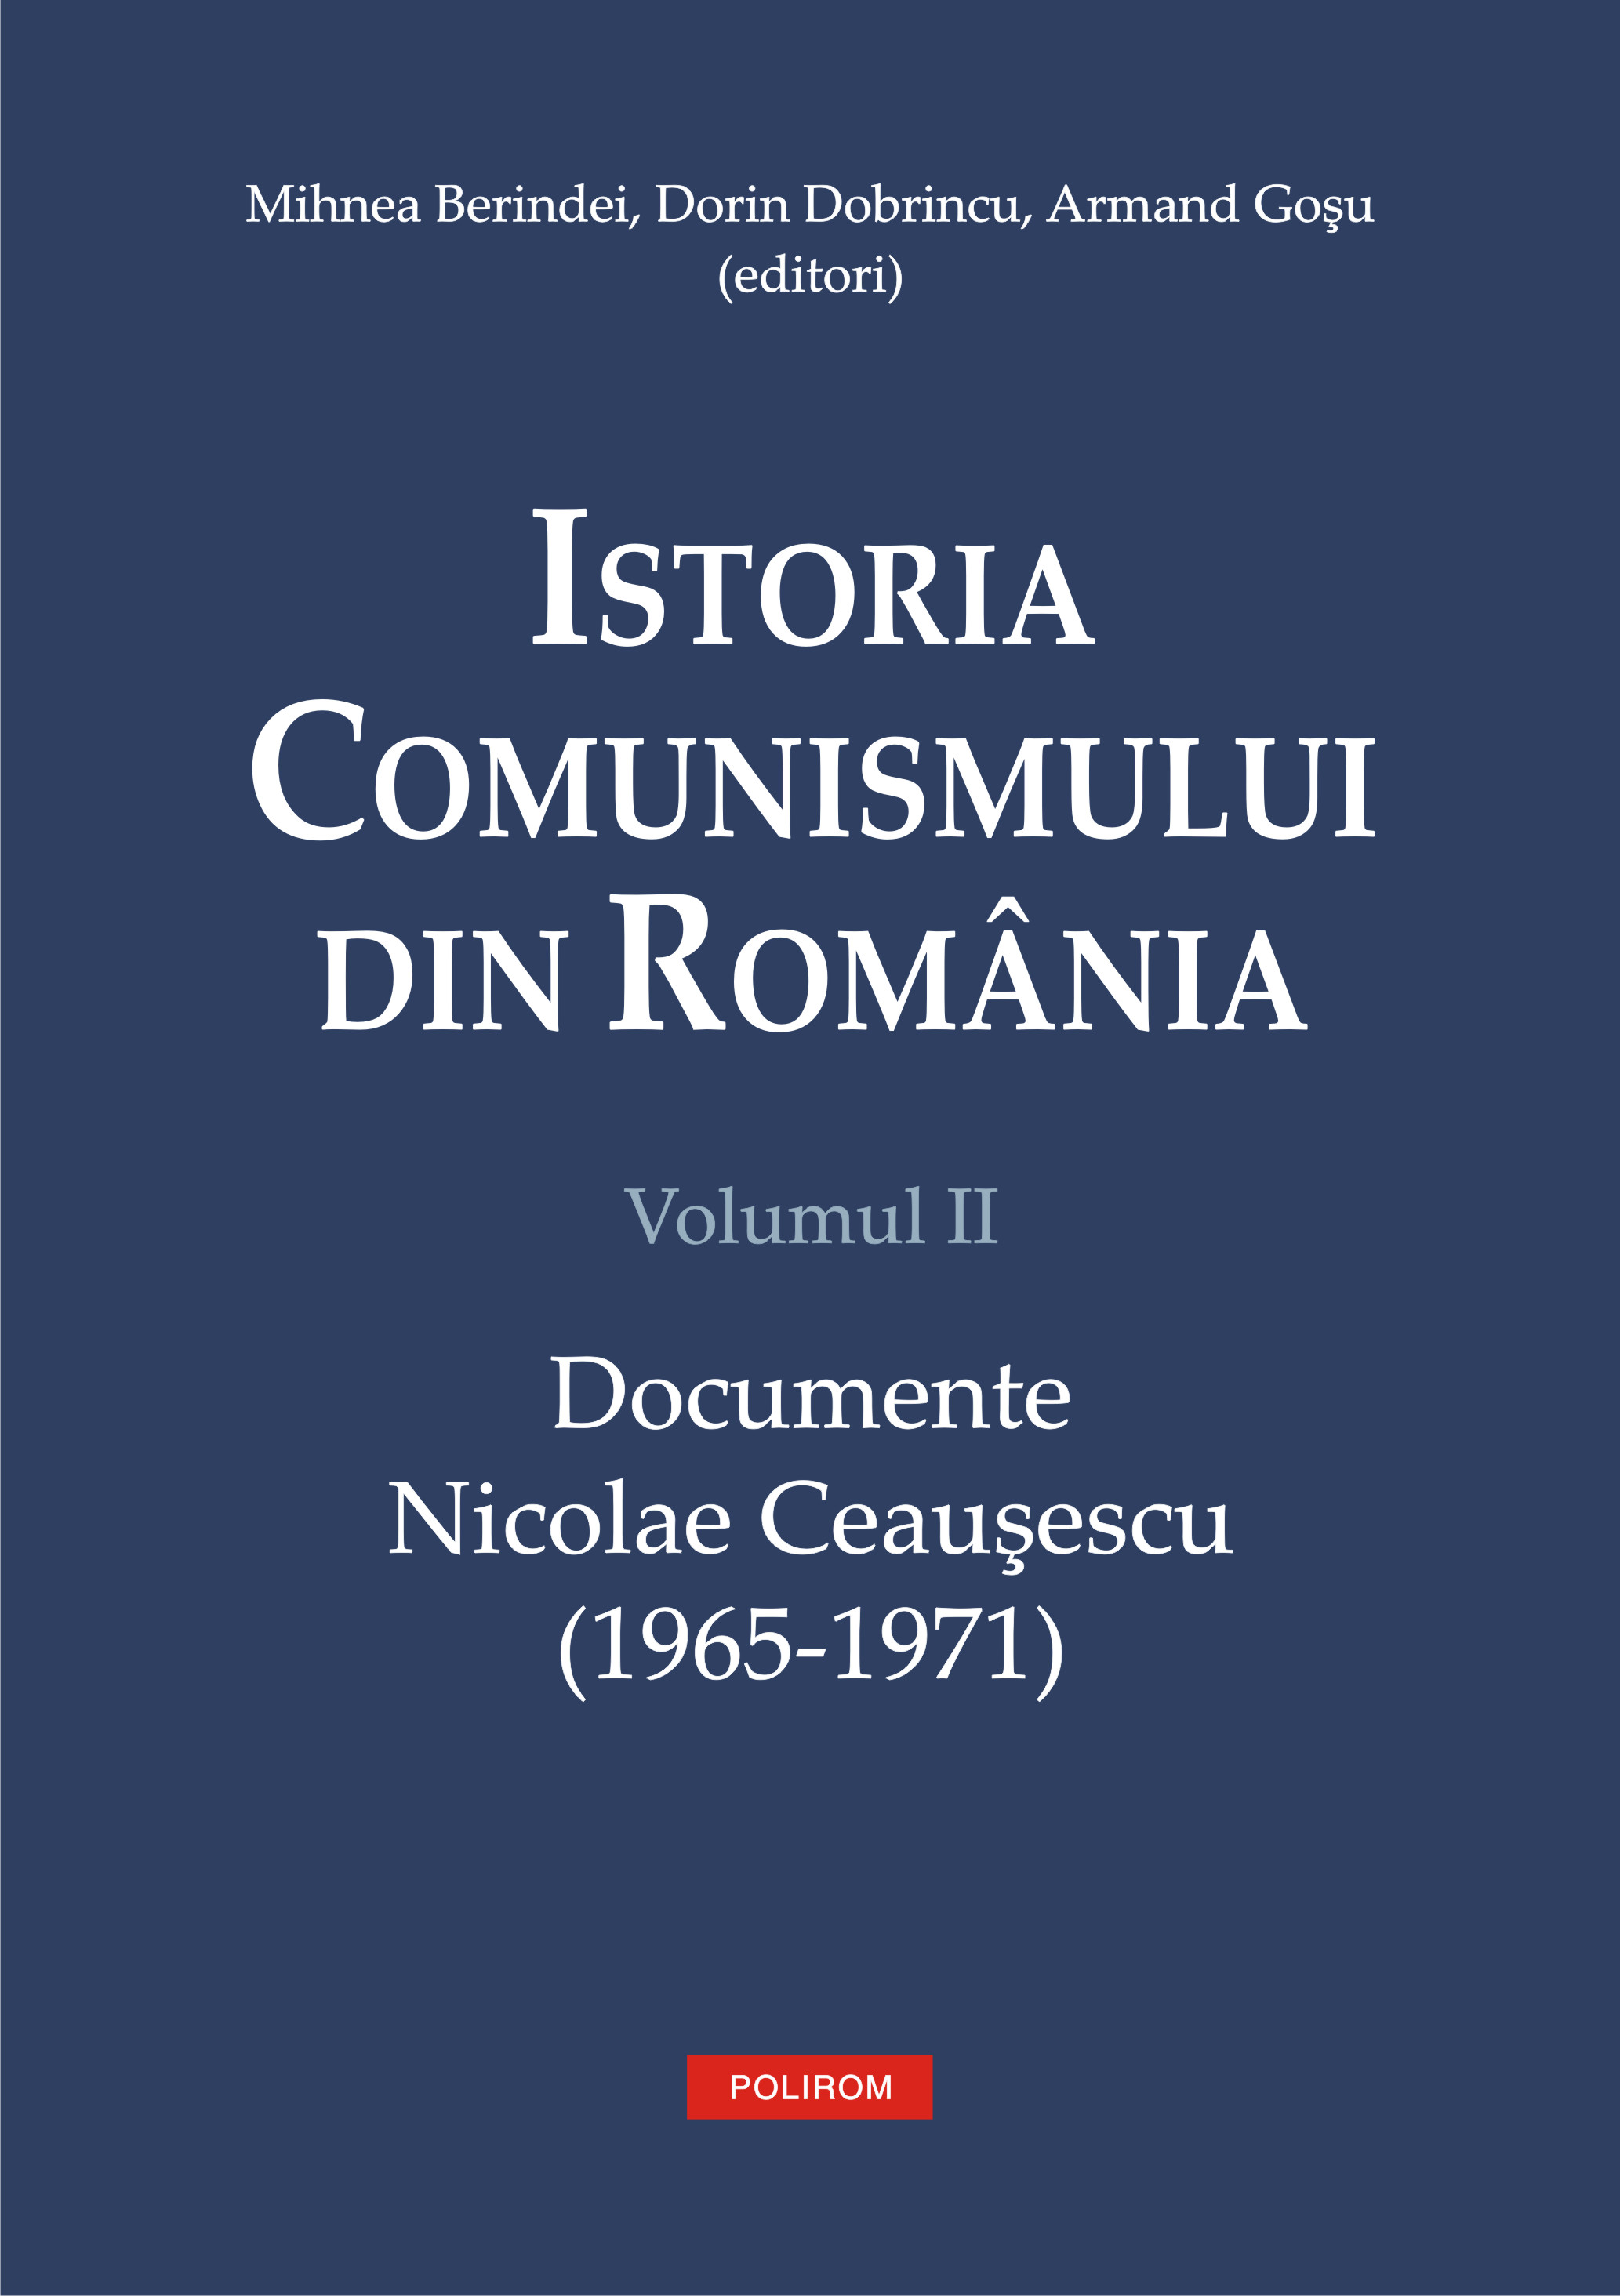 eBook Istoria comunismului din Romania Vol.2: Documente. Nicolae Ceausescu (1965-1971) - Mihnea Berindei, Dorin Dobrincu, Armand Gosu